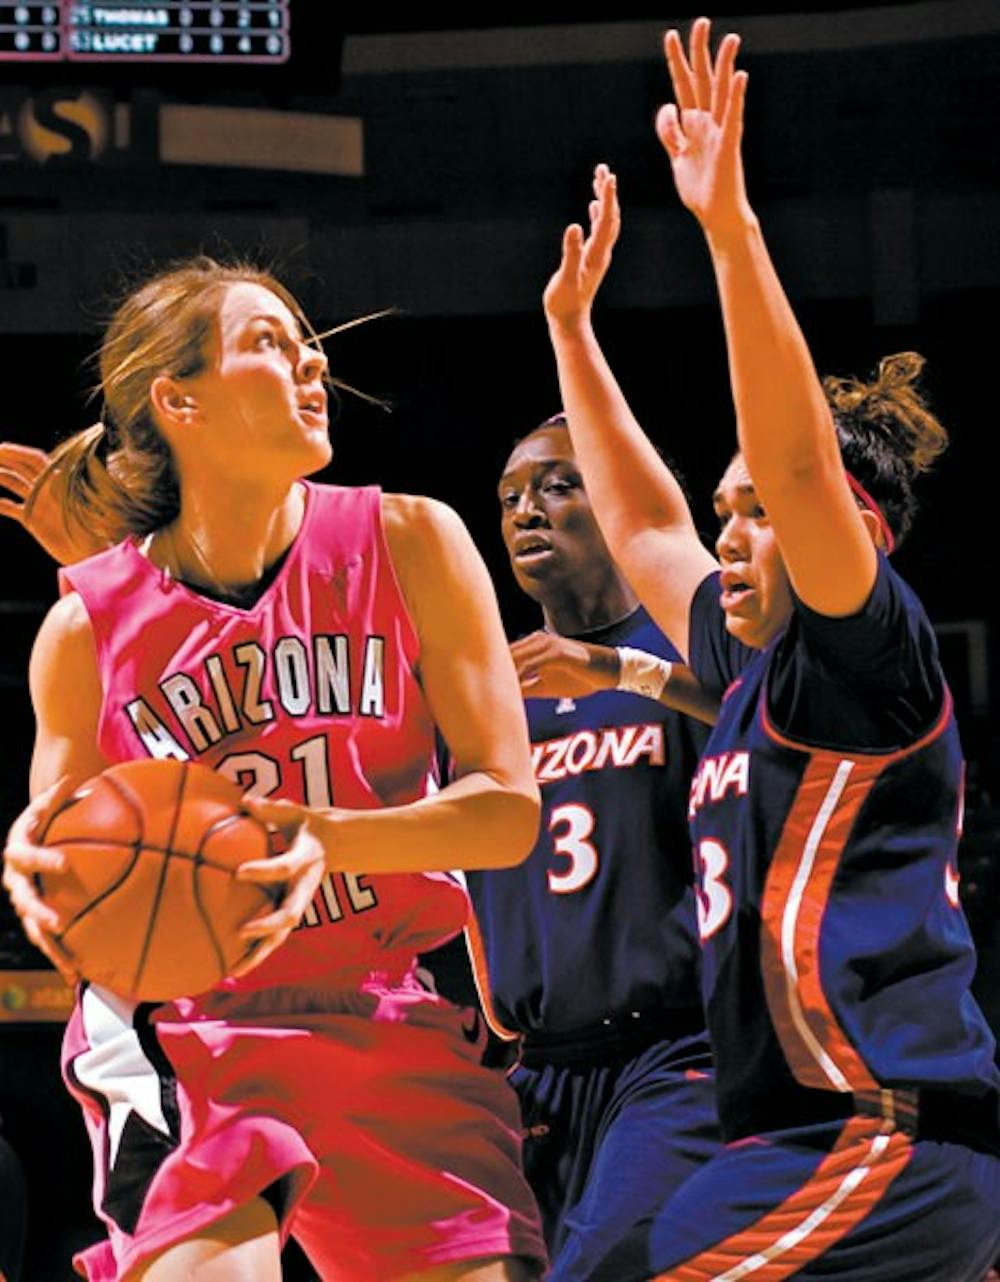 2009 University of Arizona @ ASU Women's Basketball